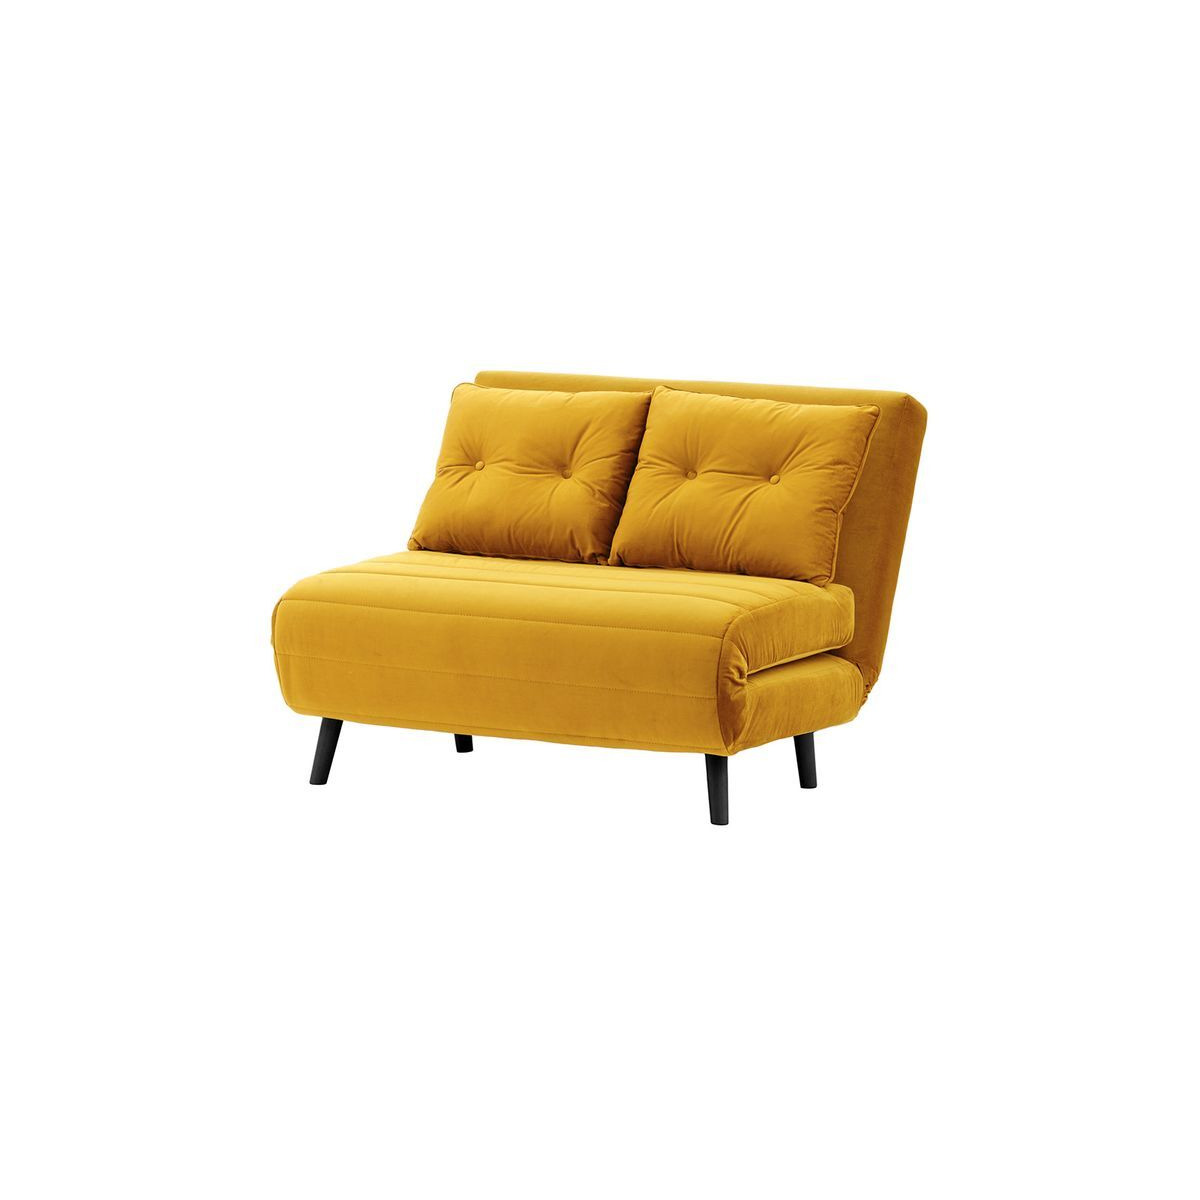 Flic Small Sofa Bed - width 103 cm, beige, Leg colour: wax black - image 1